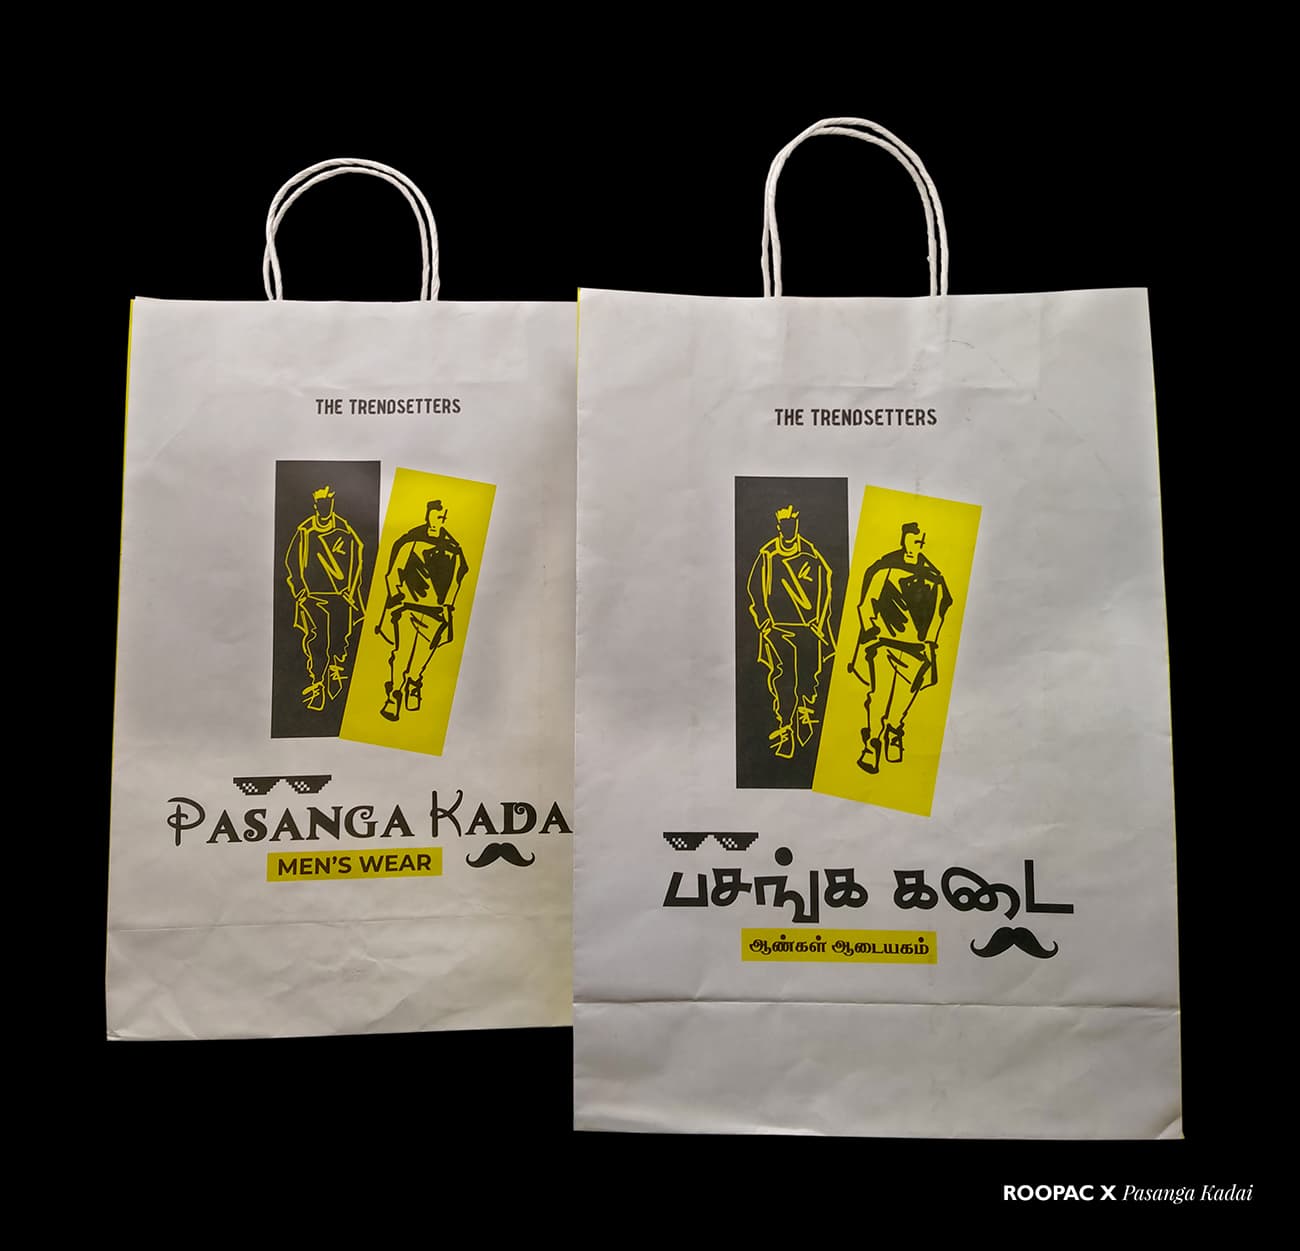 Paavay Popular Shapewear's Designer Paper bag at Coimbatore